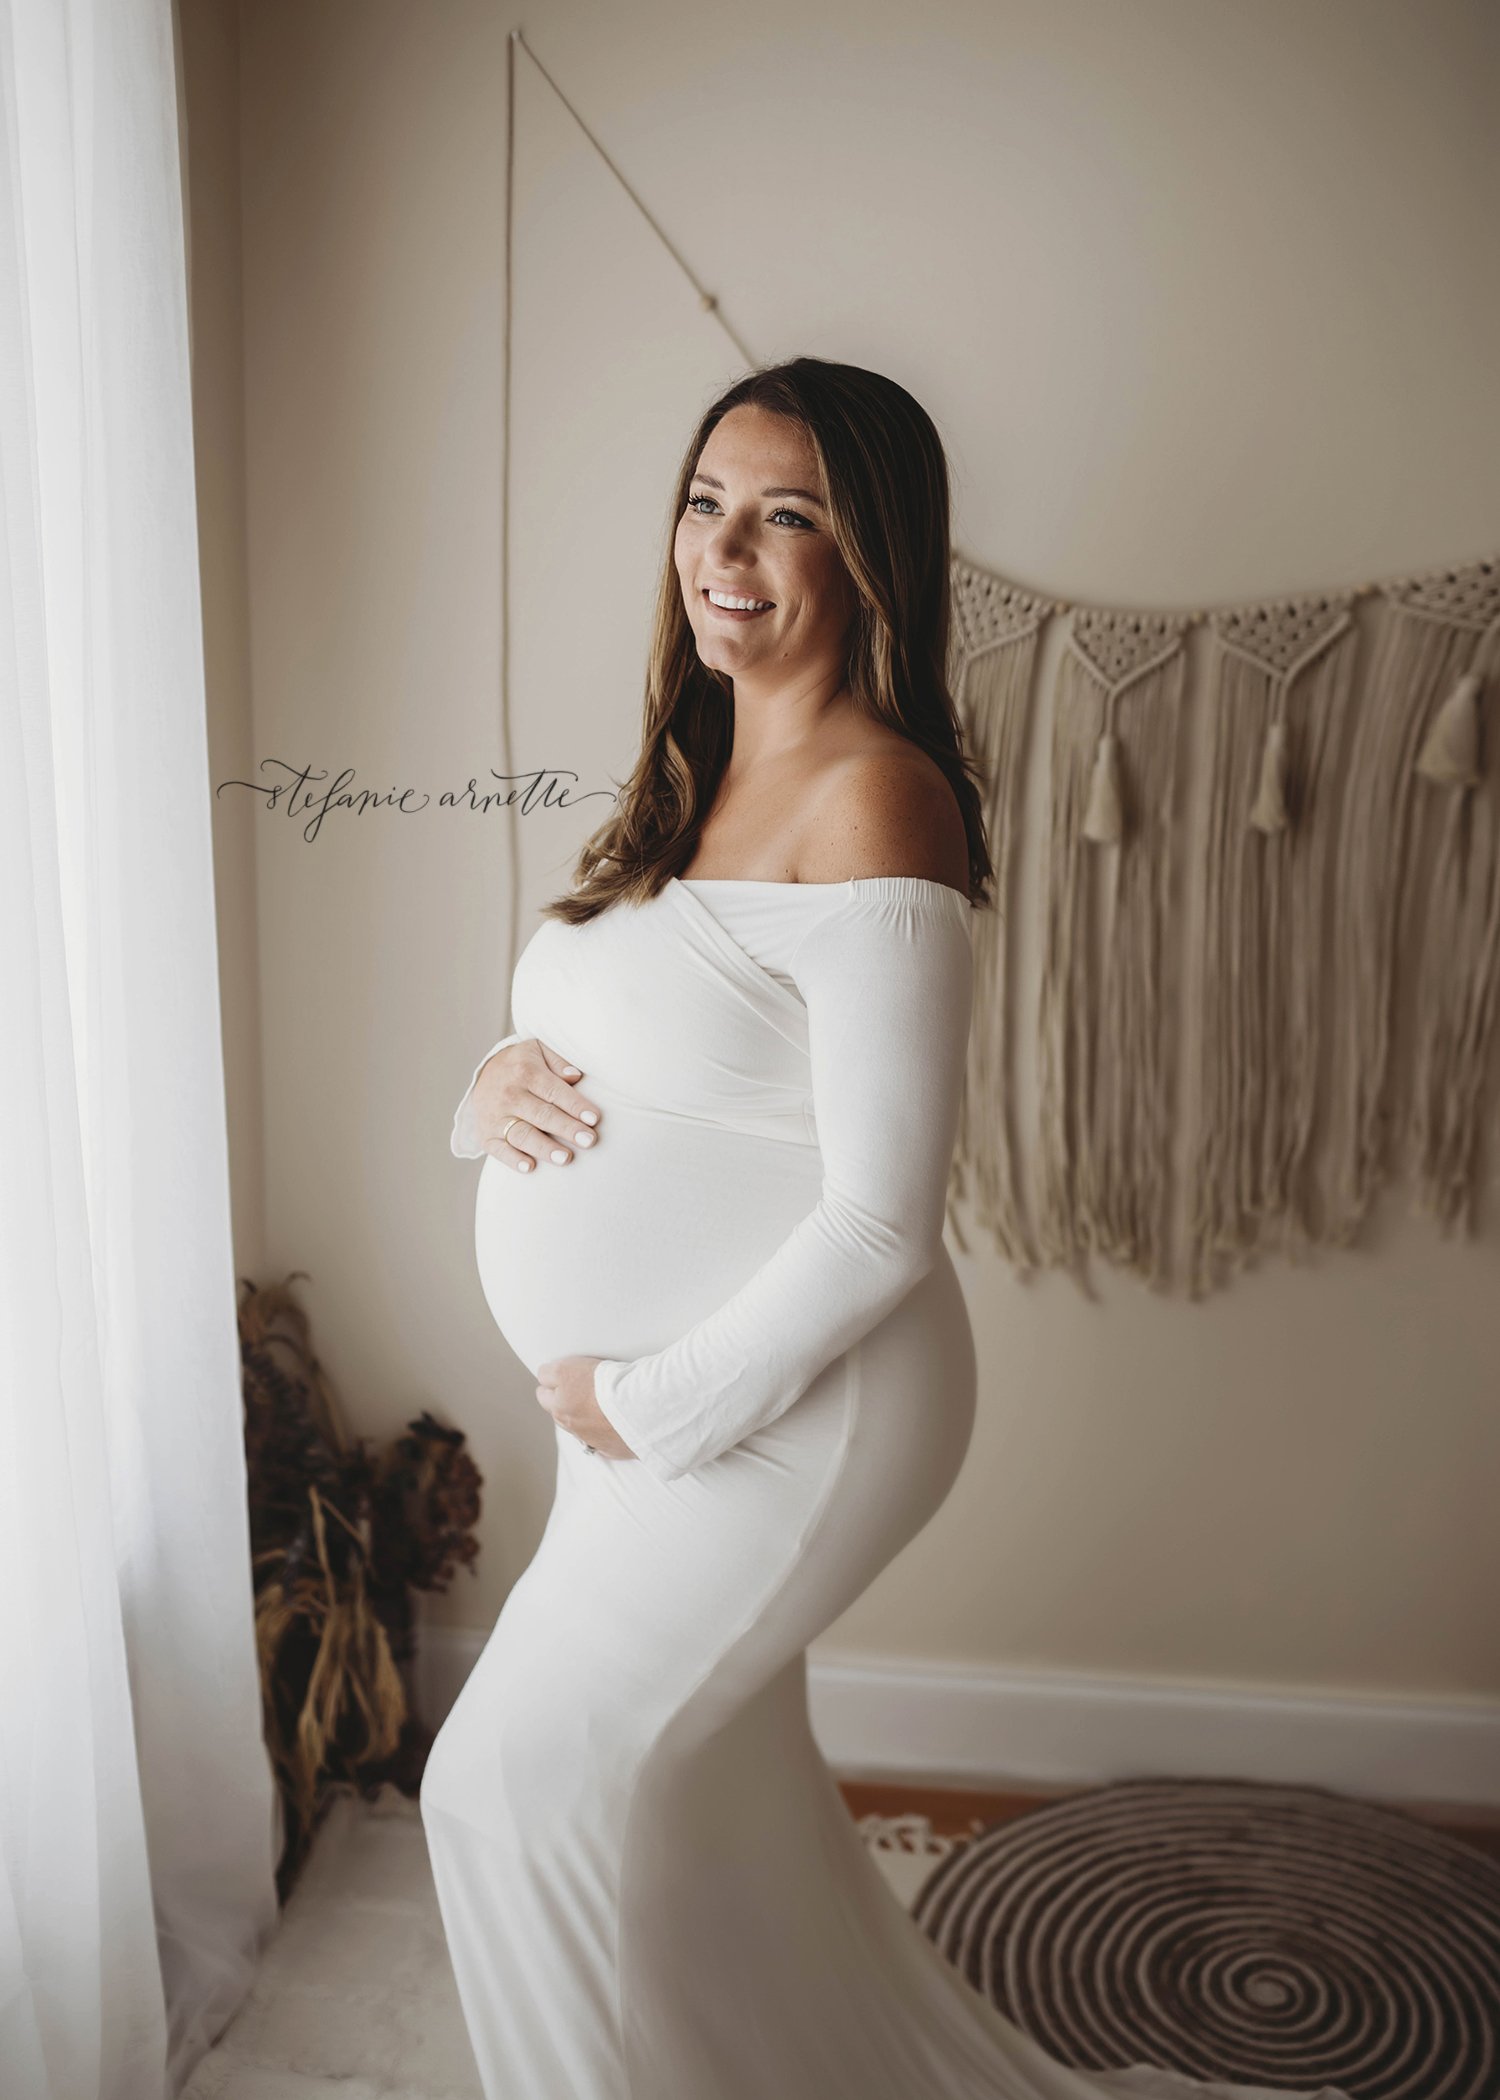 newnan maternity photographer, maternity photography in newnan, maternity photography packages